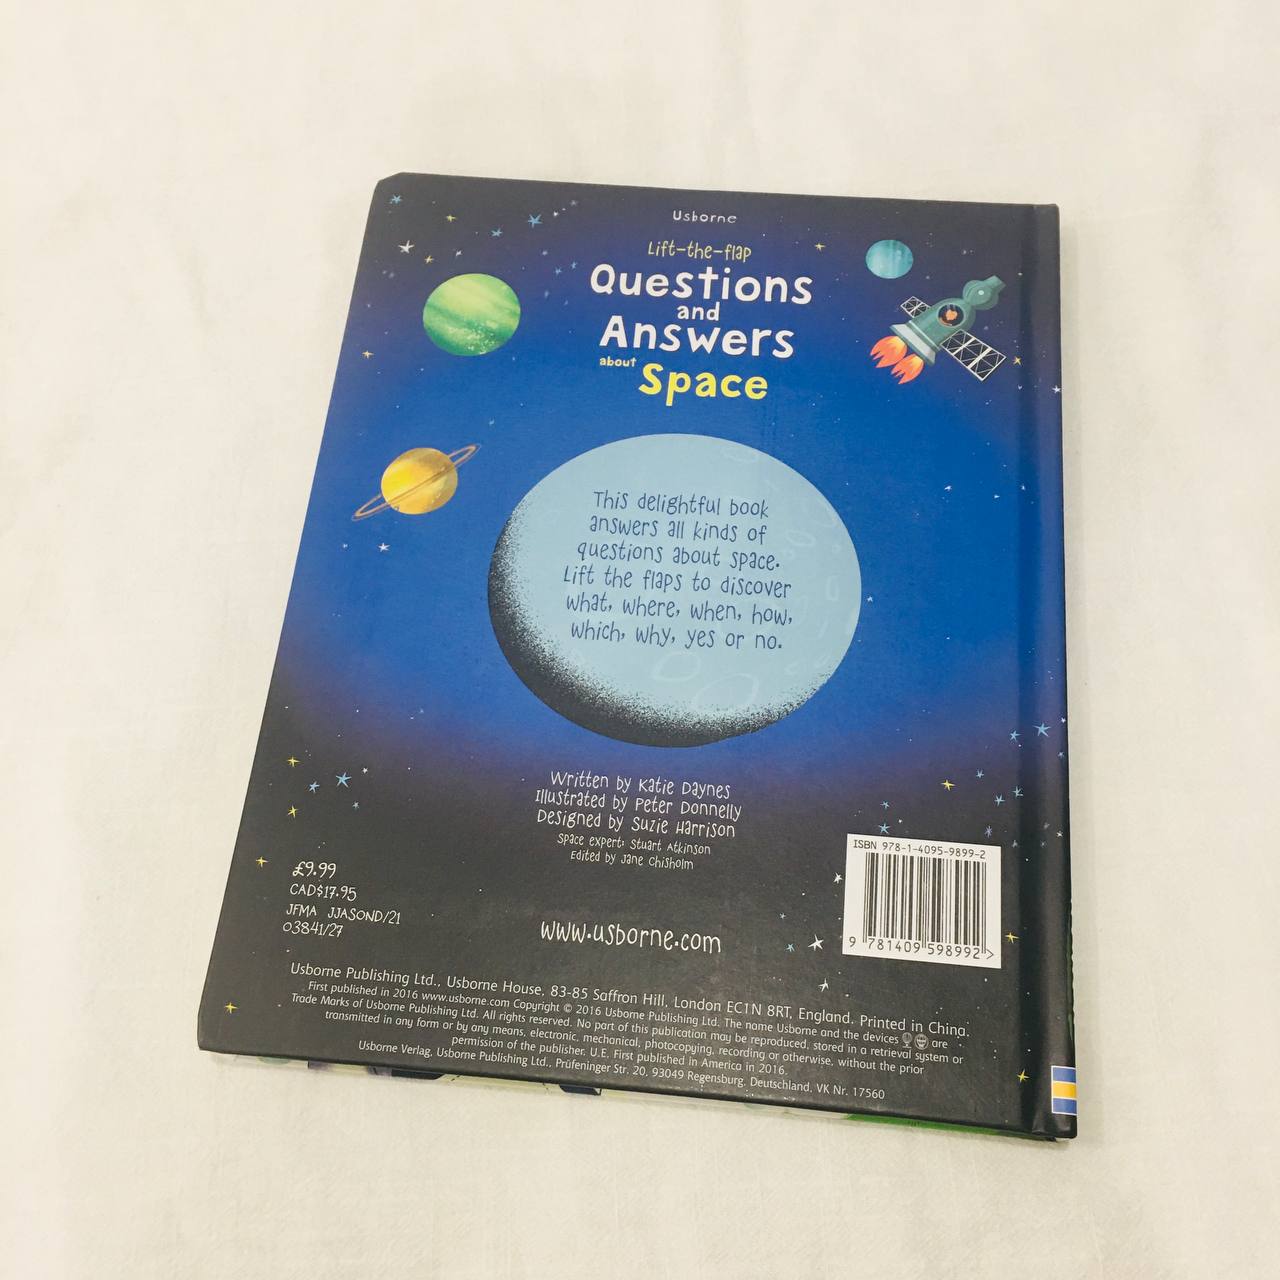 Sách - Usborne Lift-the-flap Questions and Answers About Space - Cho Bé Từ 5 Tuổi ( Khu Vườn Sách )